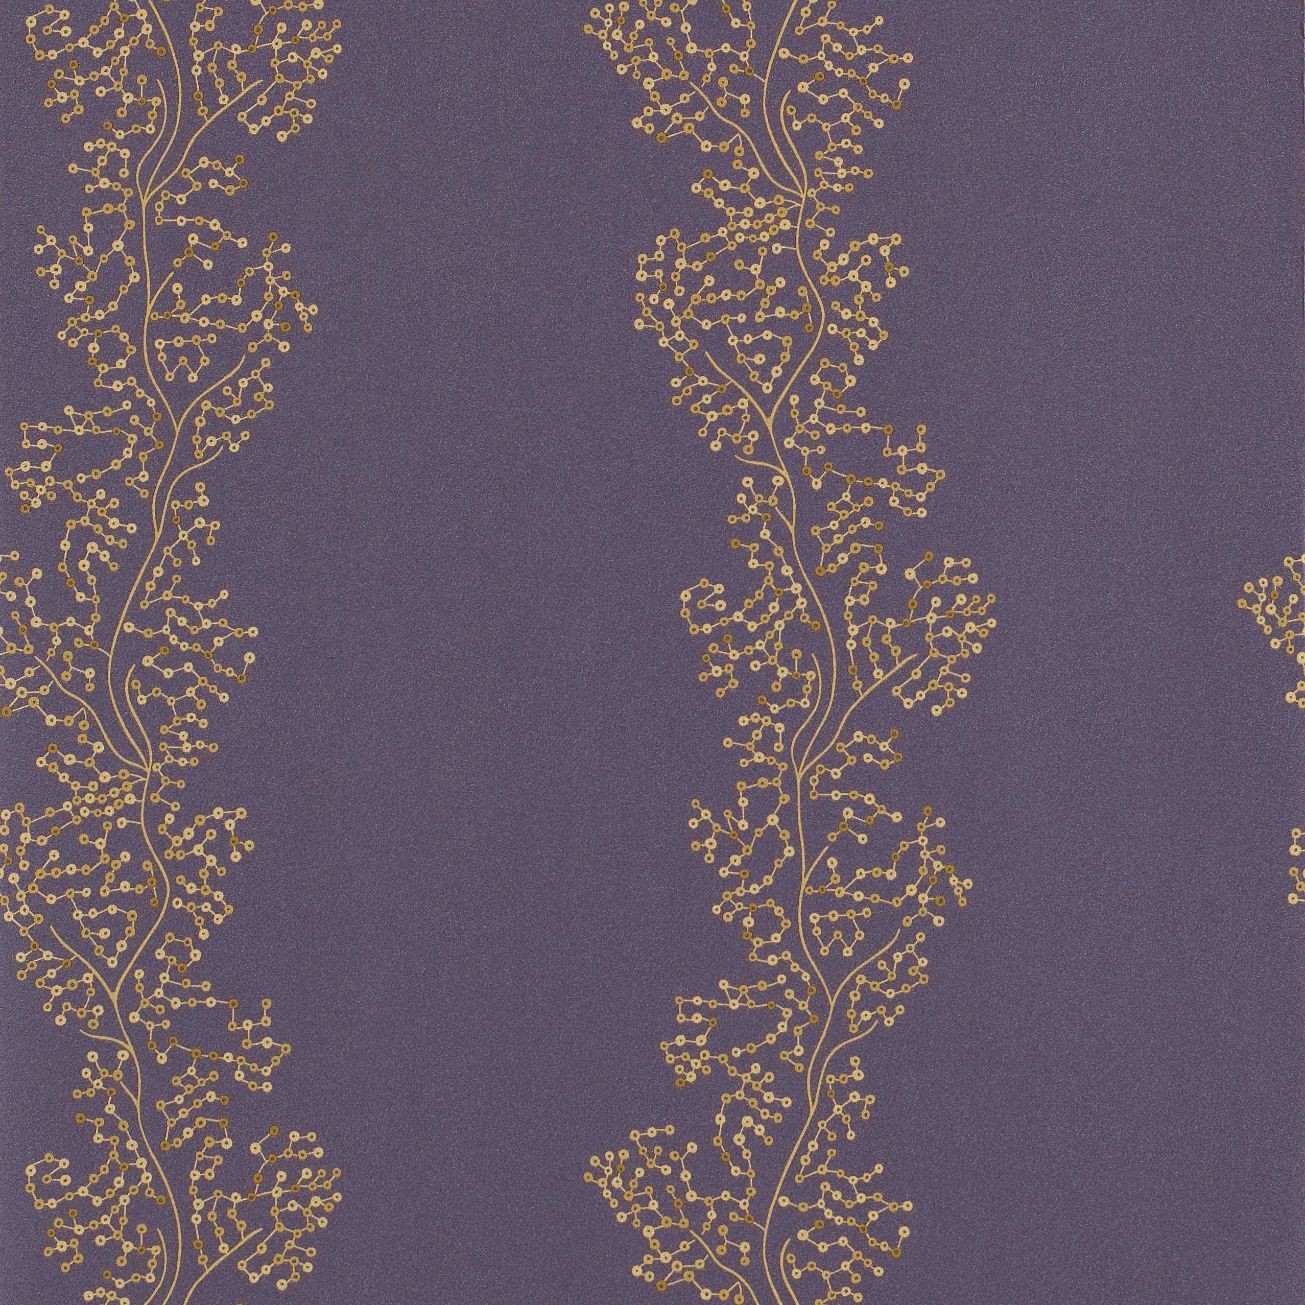  Purple   213037   Sparkle Coral   Aegean   Vinyl   Sanderson Wallpaper